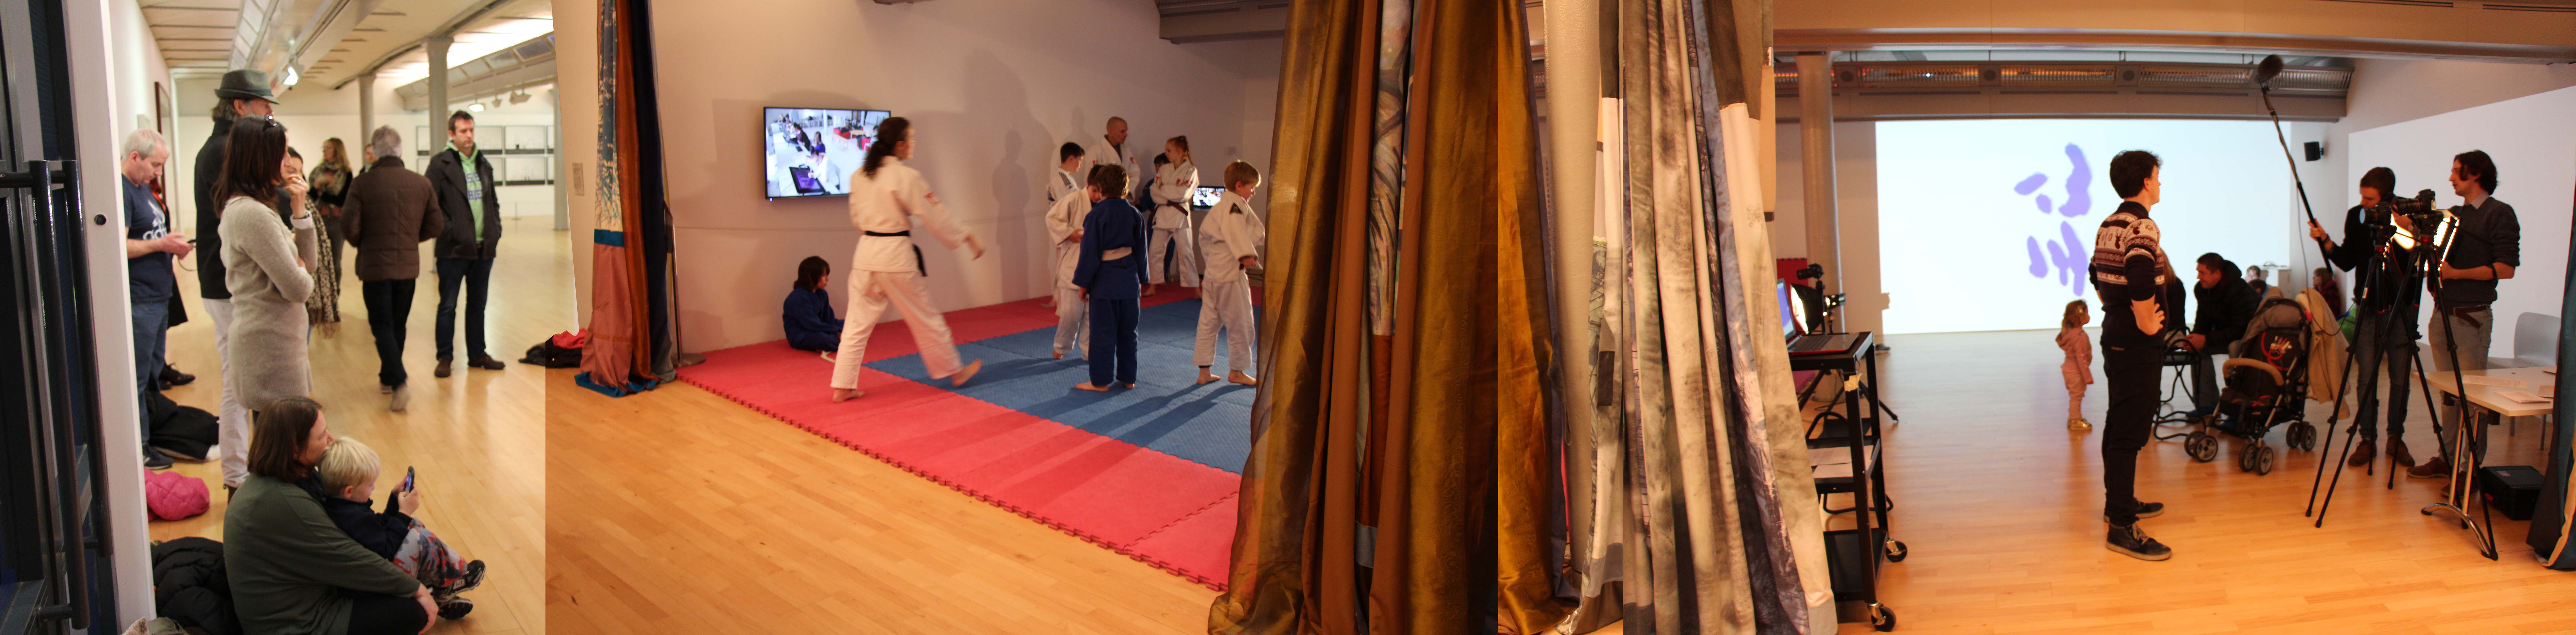 Martial Arts at TATE Liverpool